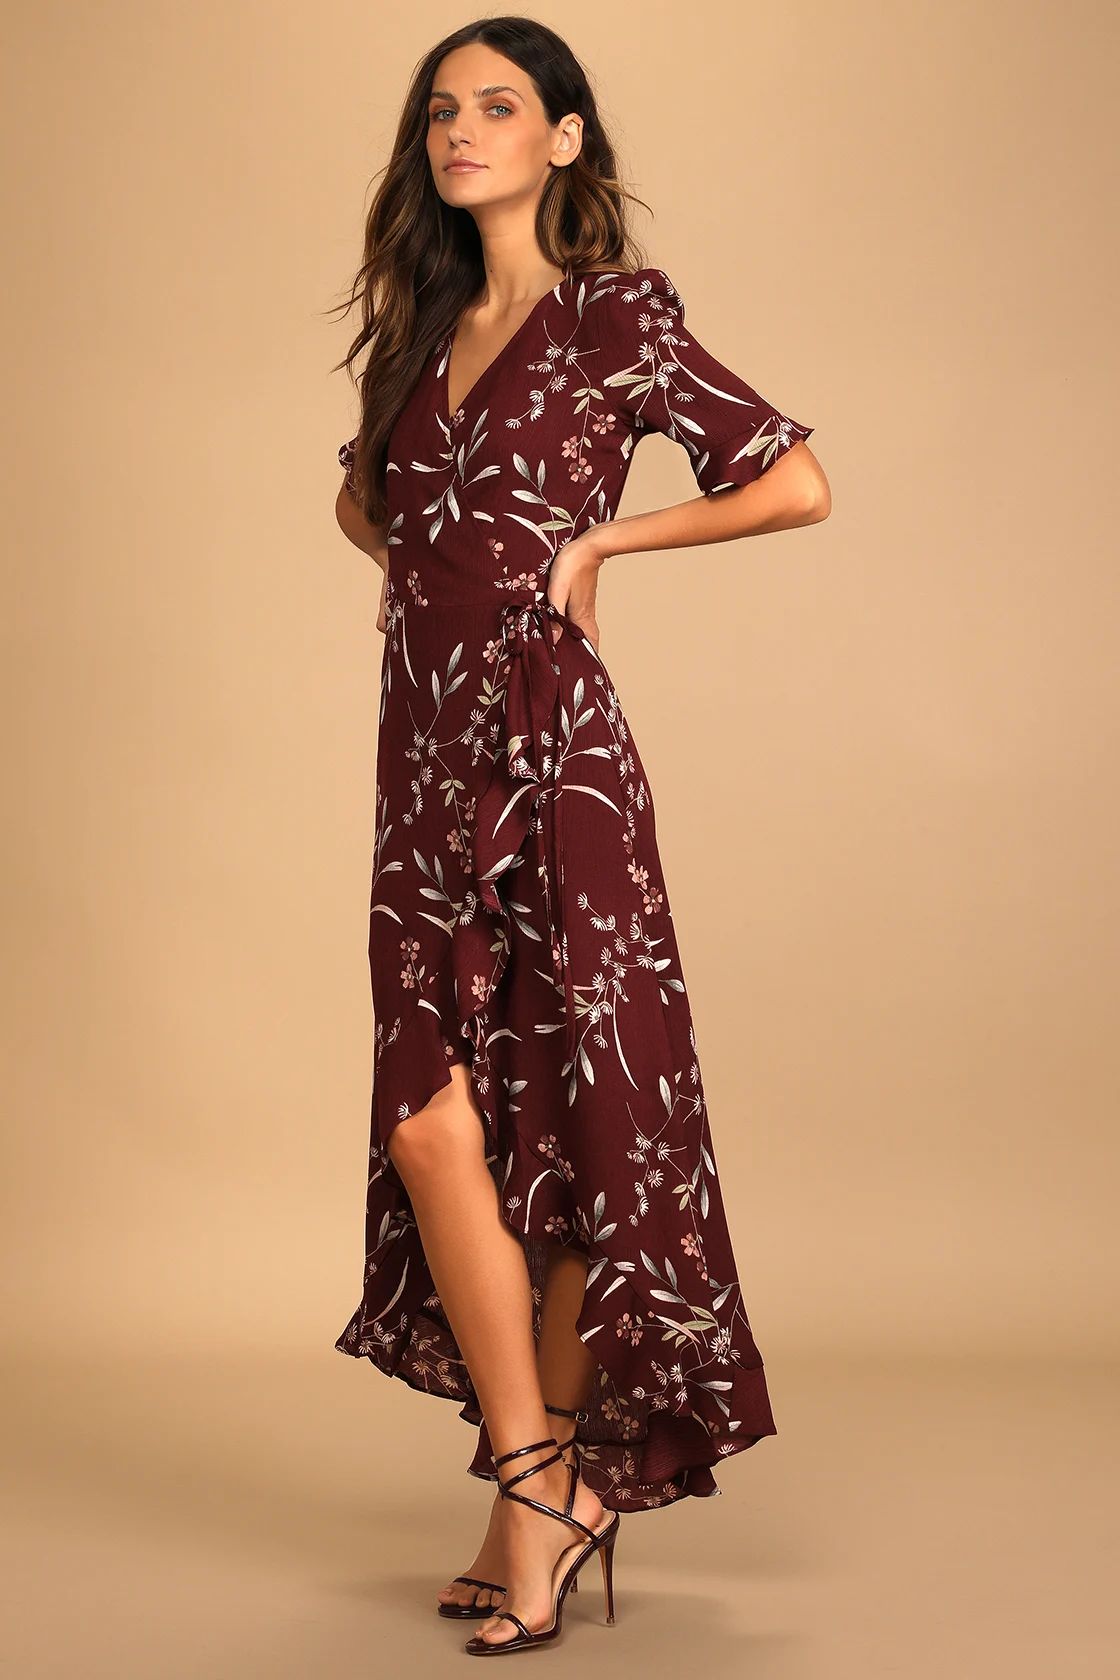 Wild Winds Burgundy Floral Print High-Low Wrap Dress | Lulus (US)